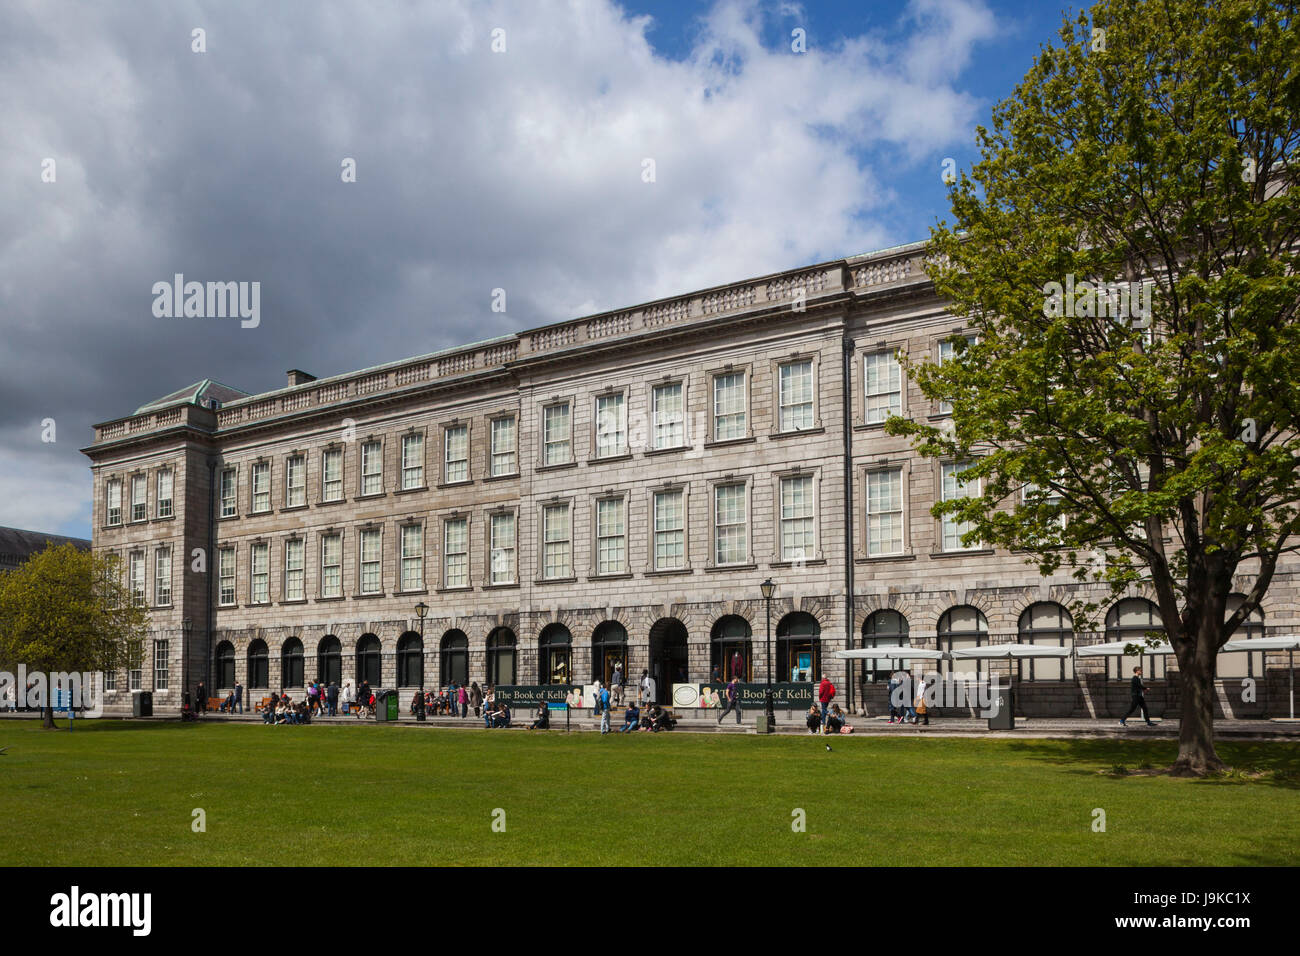 Ireland Dublin Trinity College Old Library Building Exterior Stock Photo Alamy